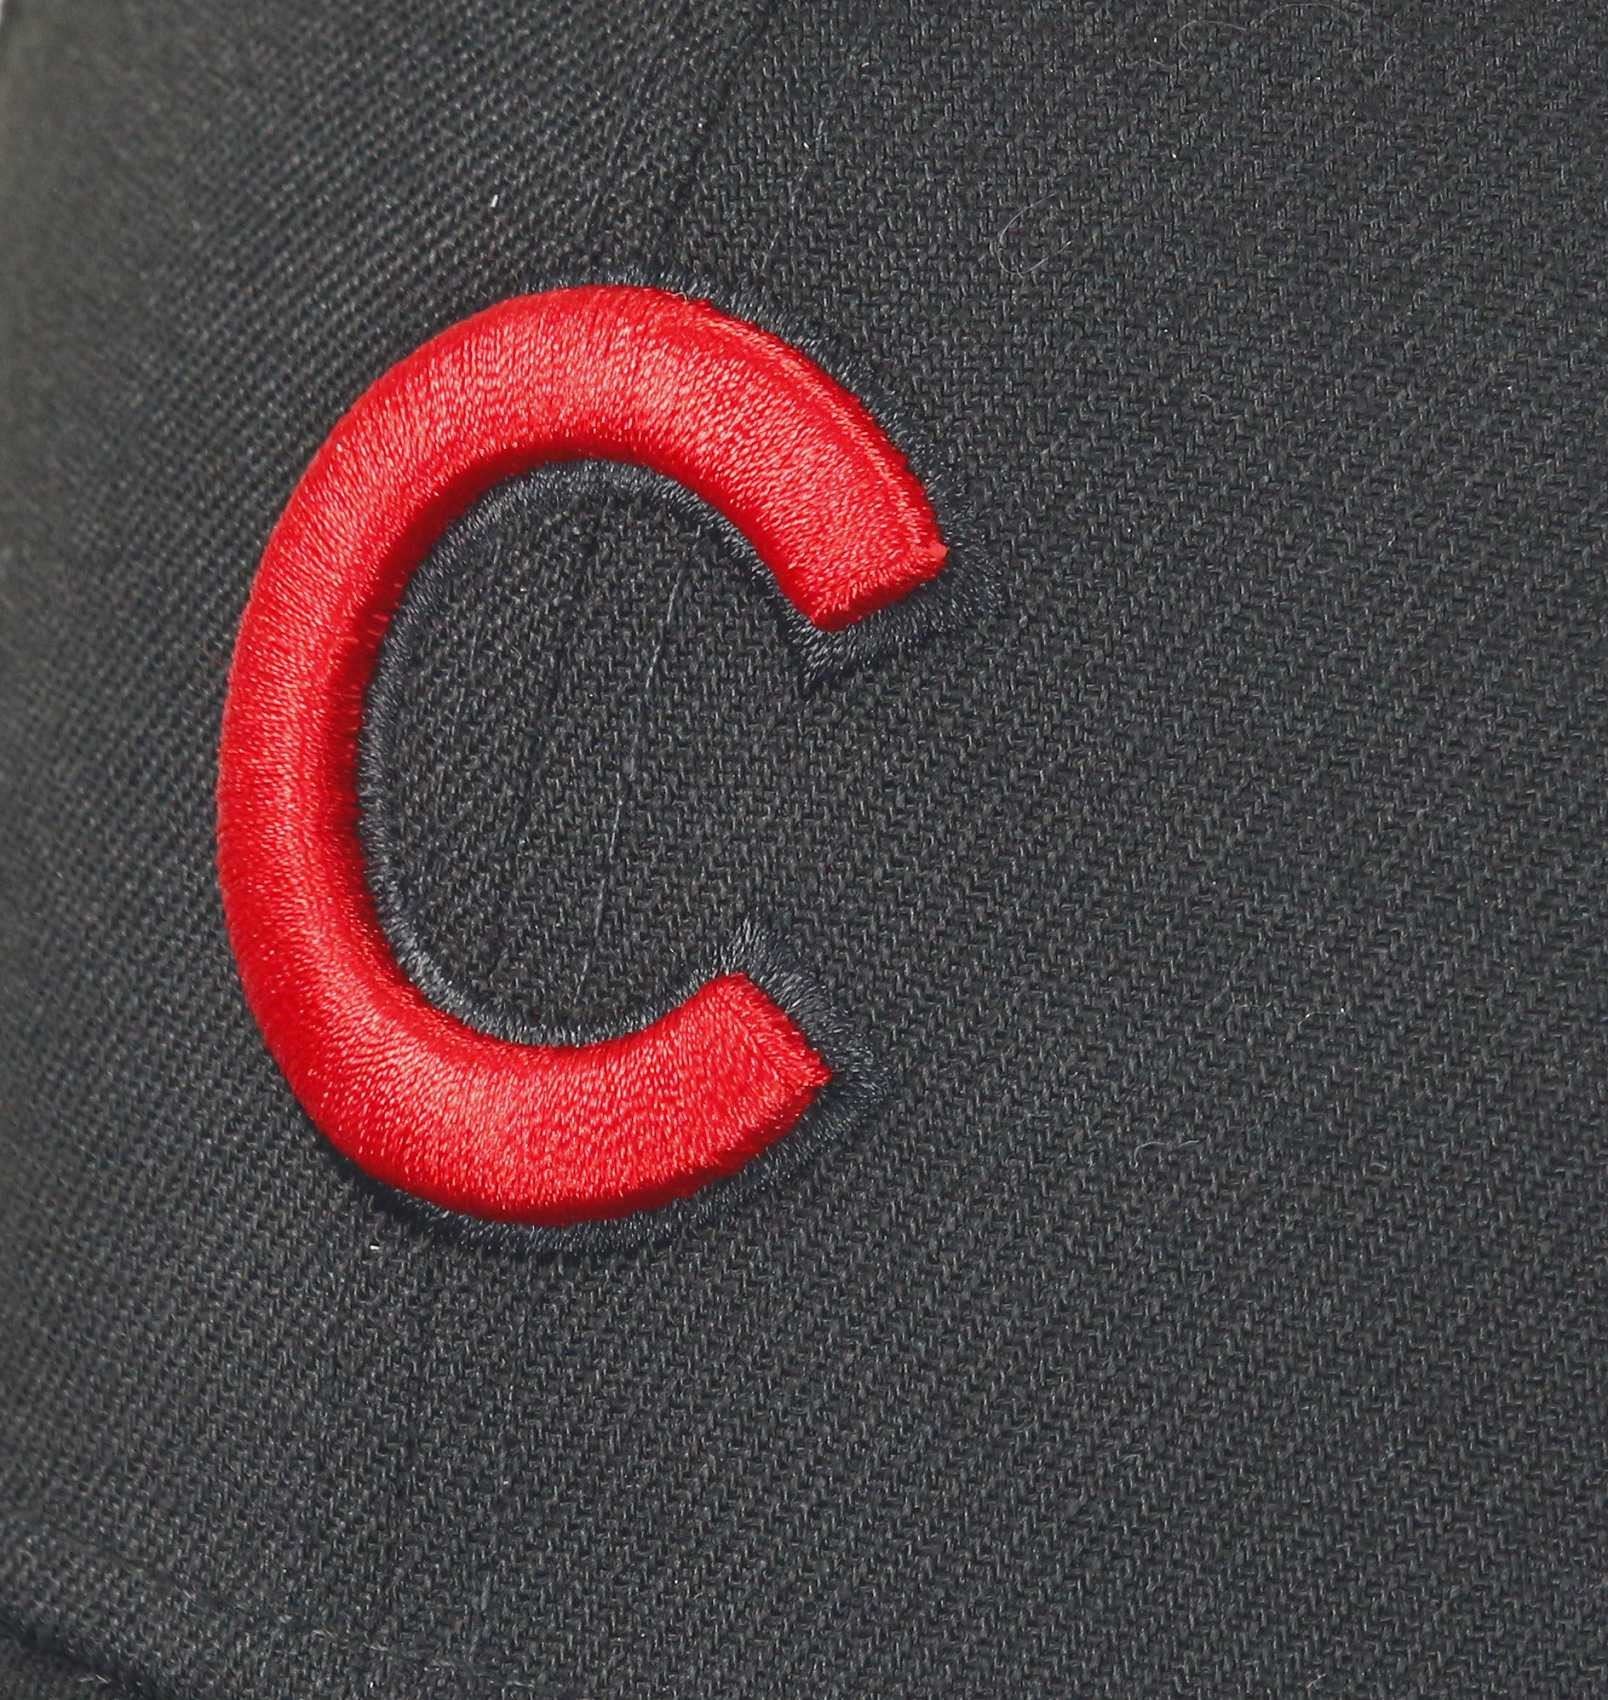 Chicago Cubs MLB Essential 9Forty Adjustable Snapback Cap New Era